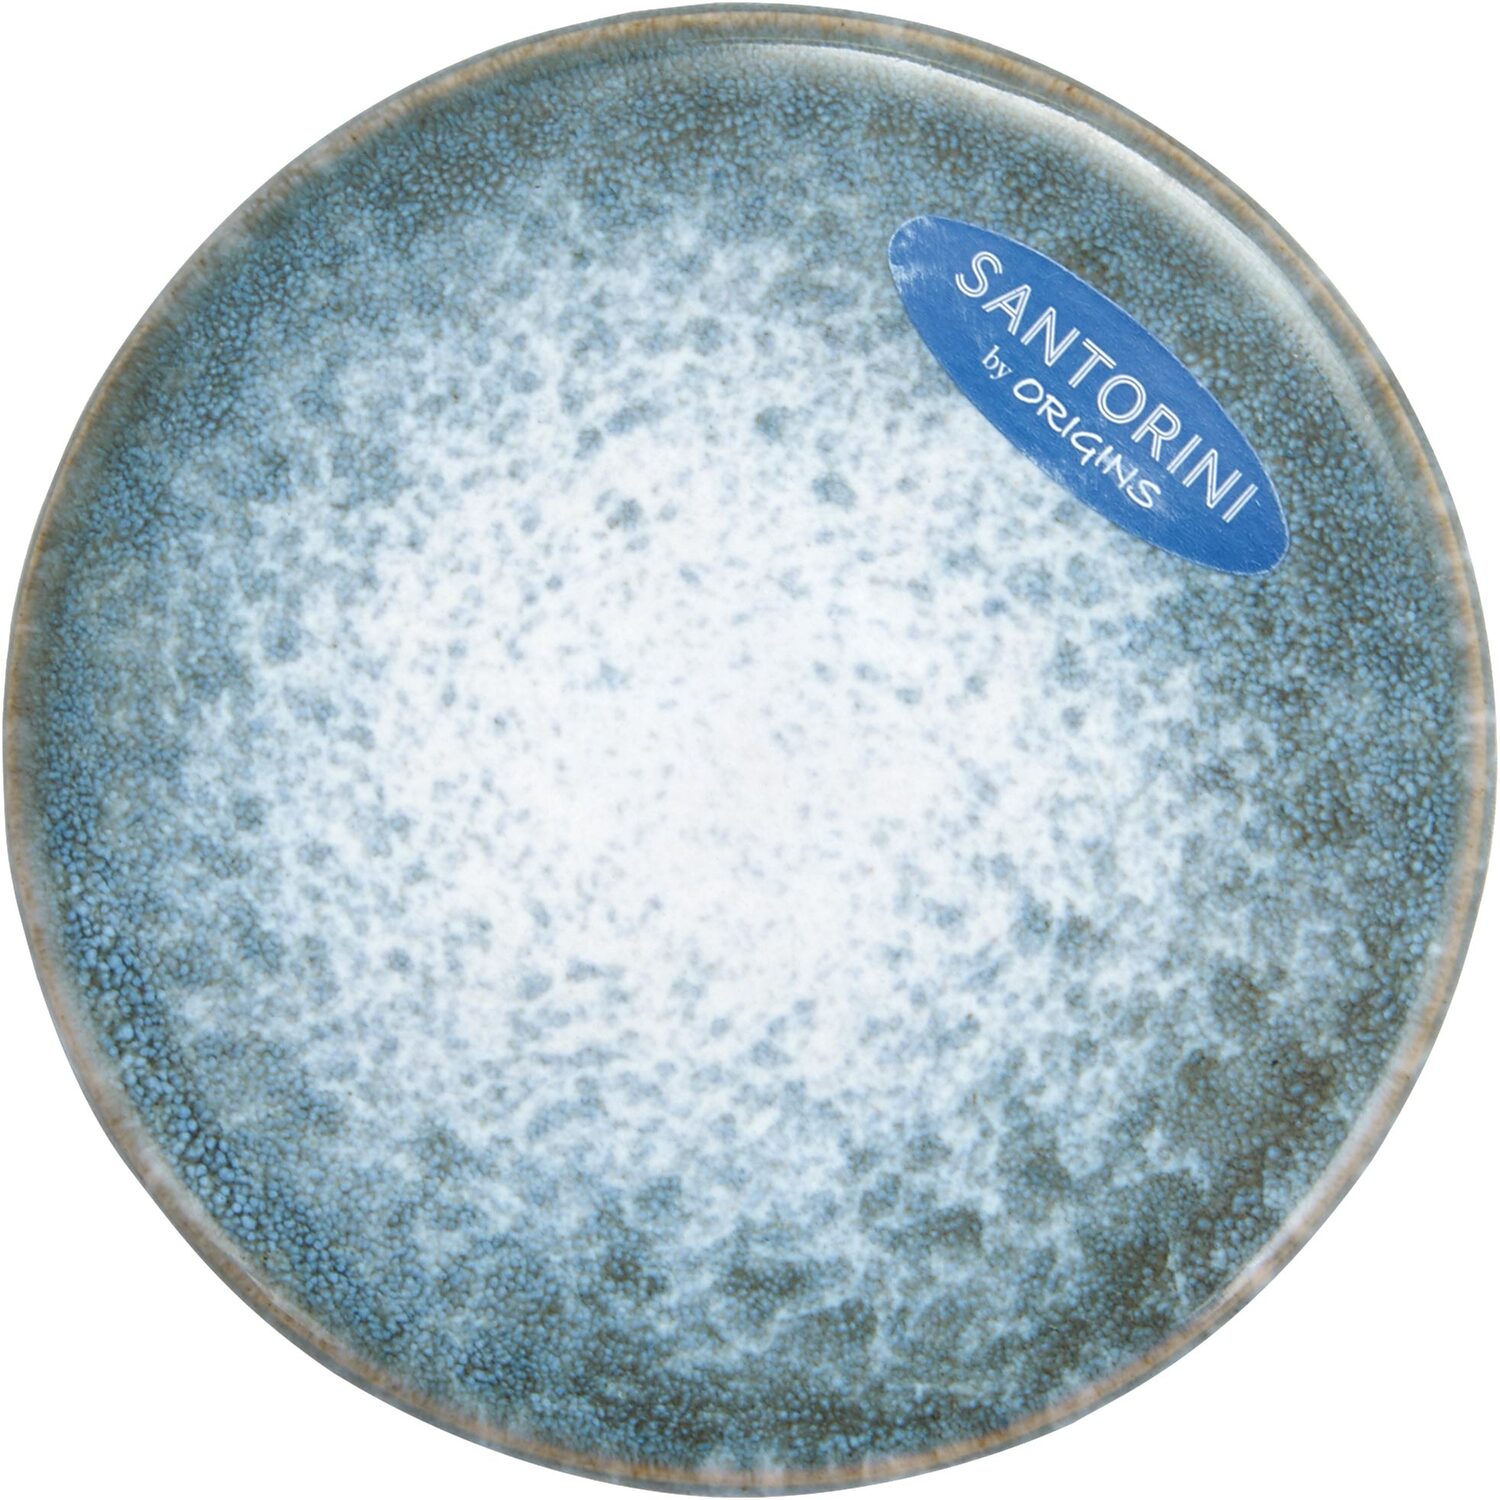 Santorini Reactive Glaze Coaster - Blue Image 1